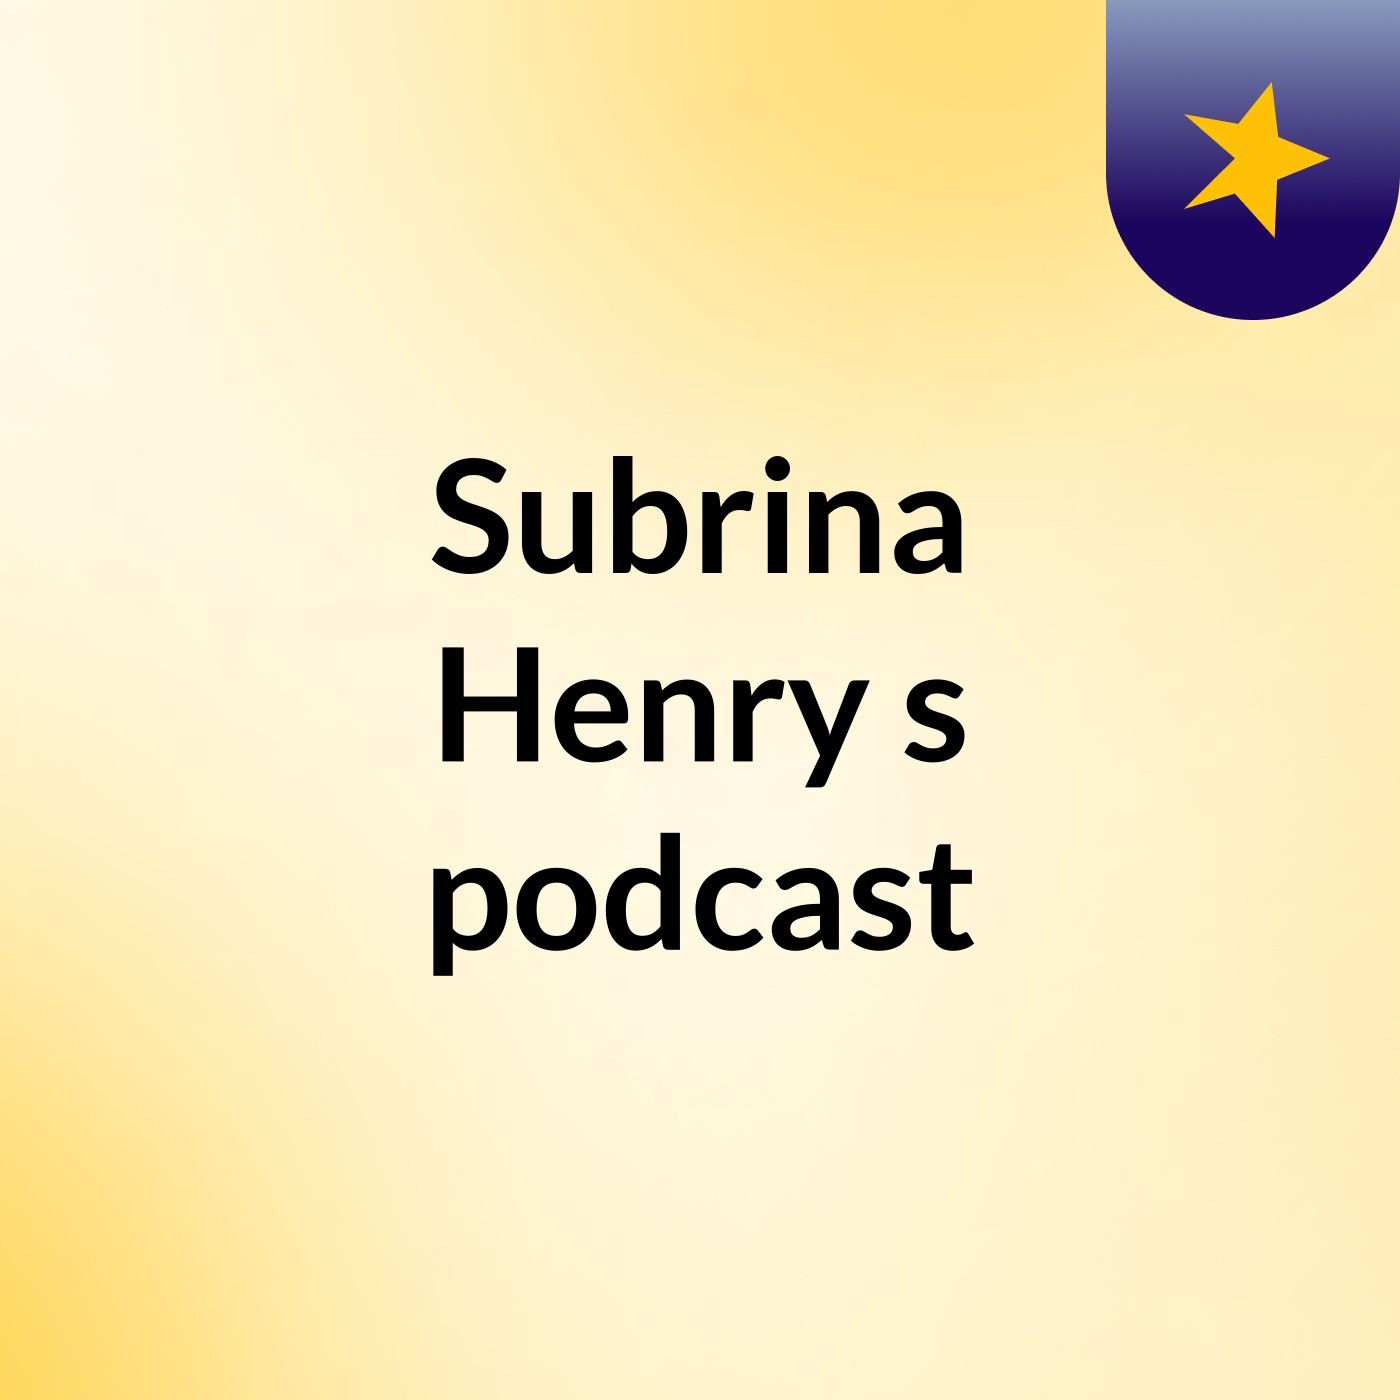 Subrina Henry's podcast